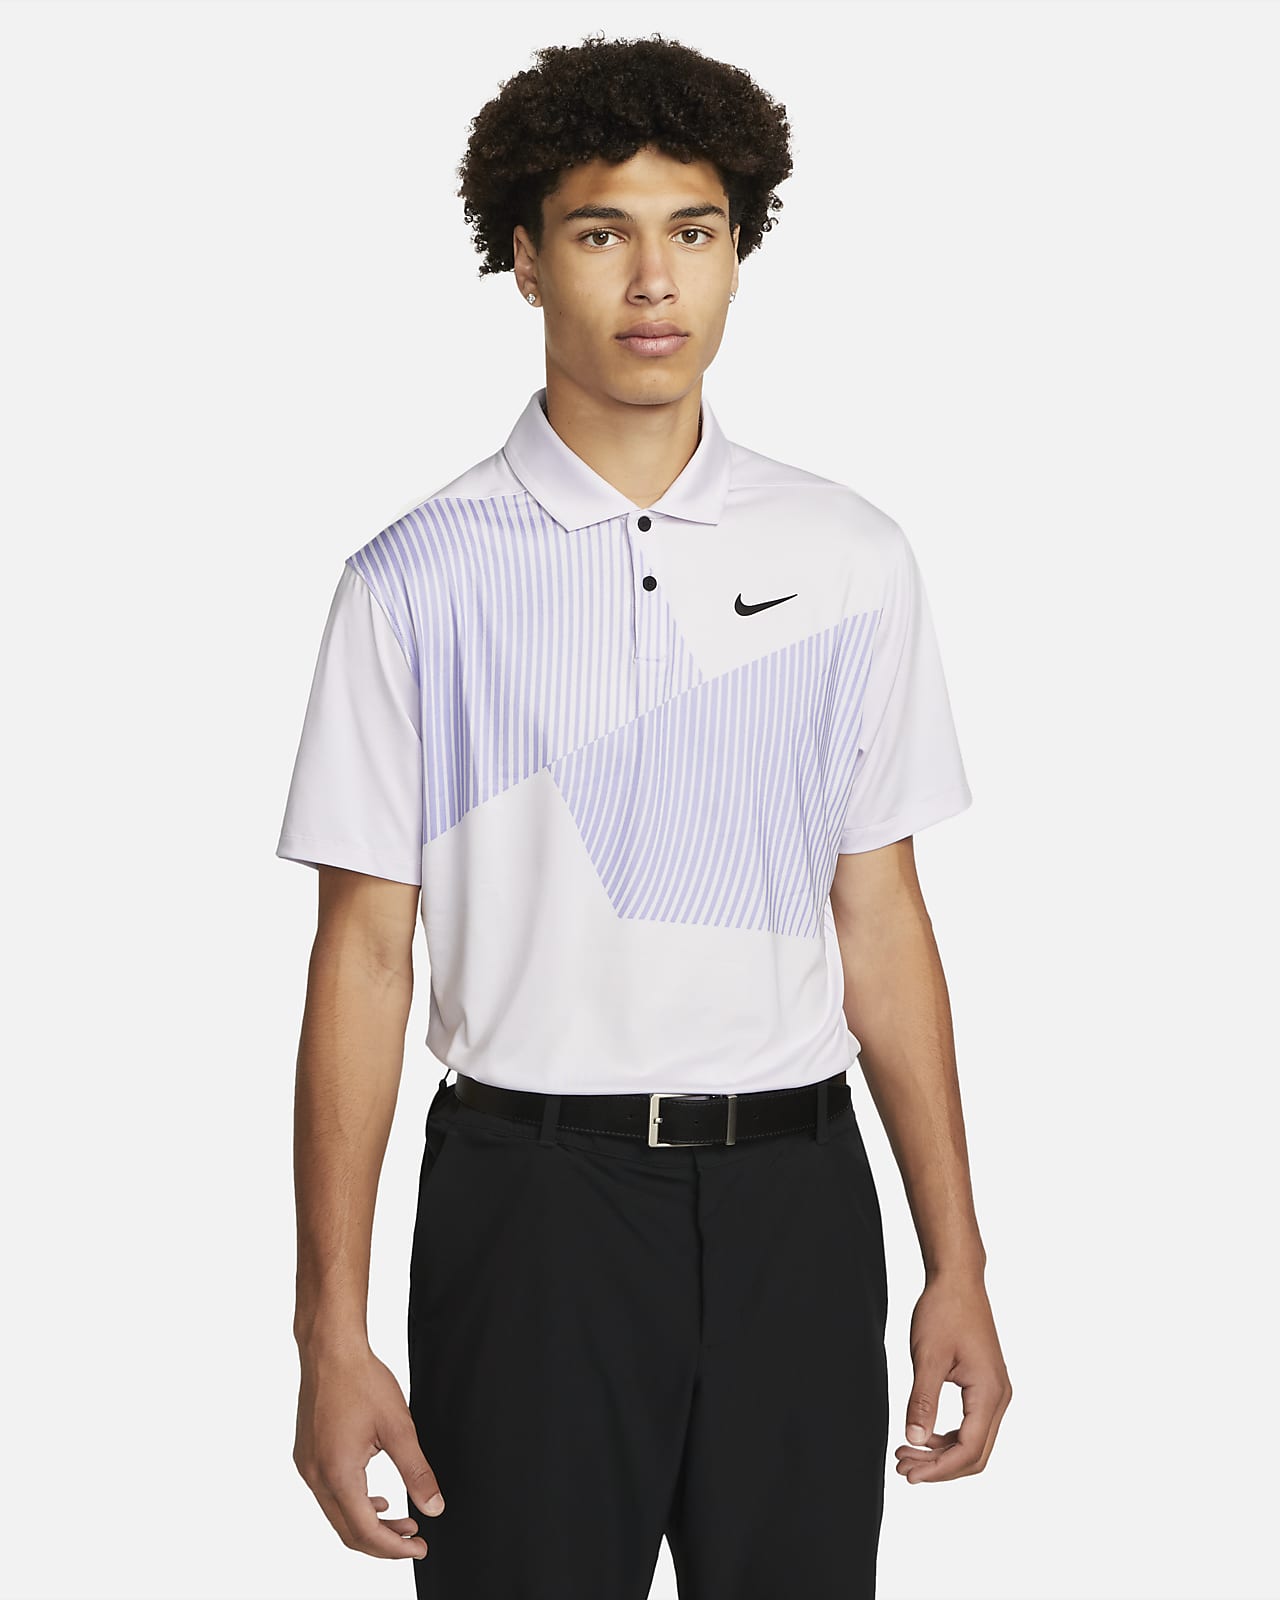 Nike Dri-FIT Vapor Men's Print Golf Polo